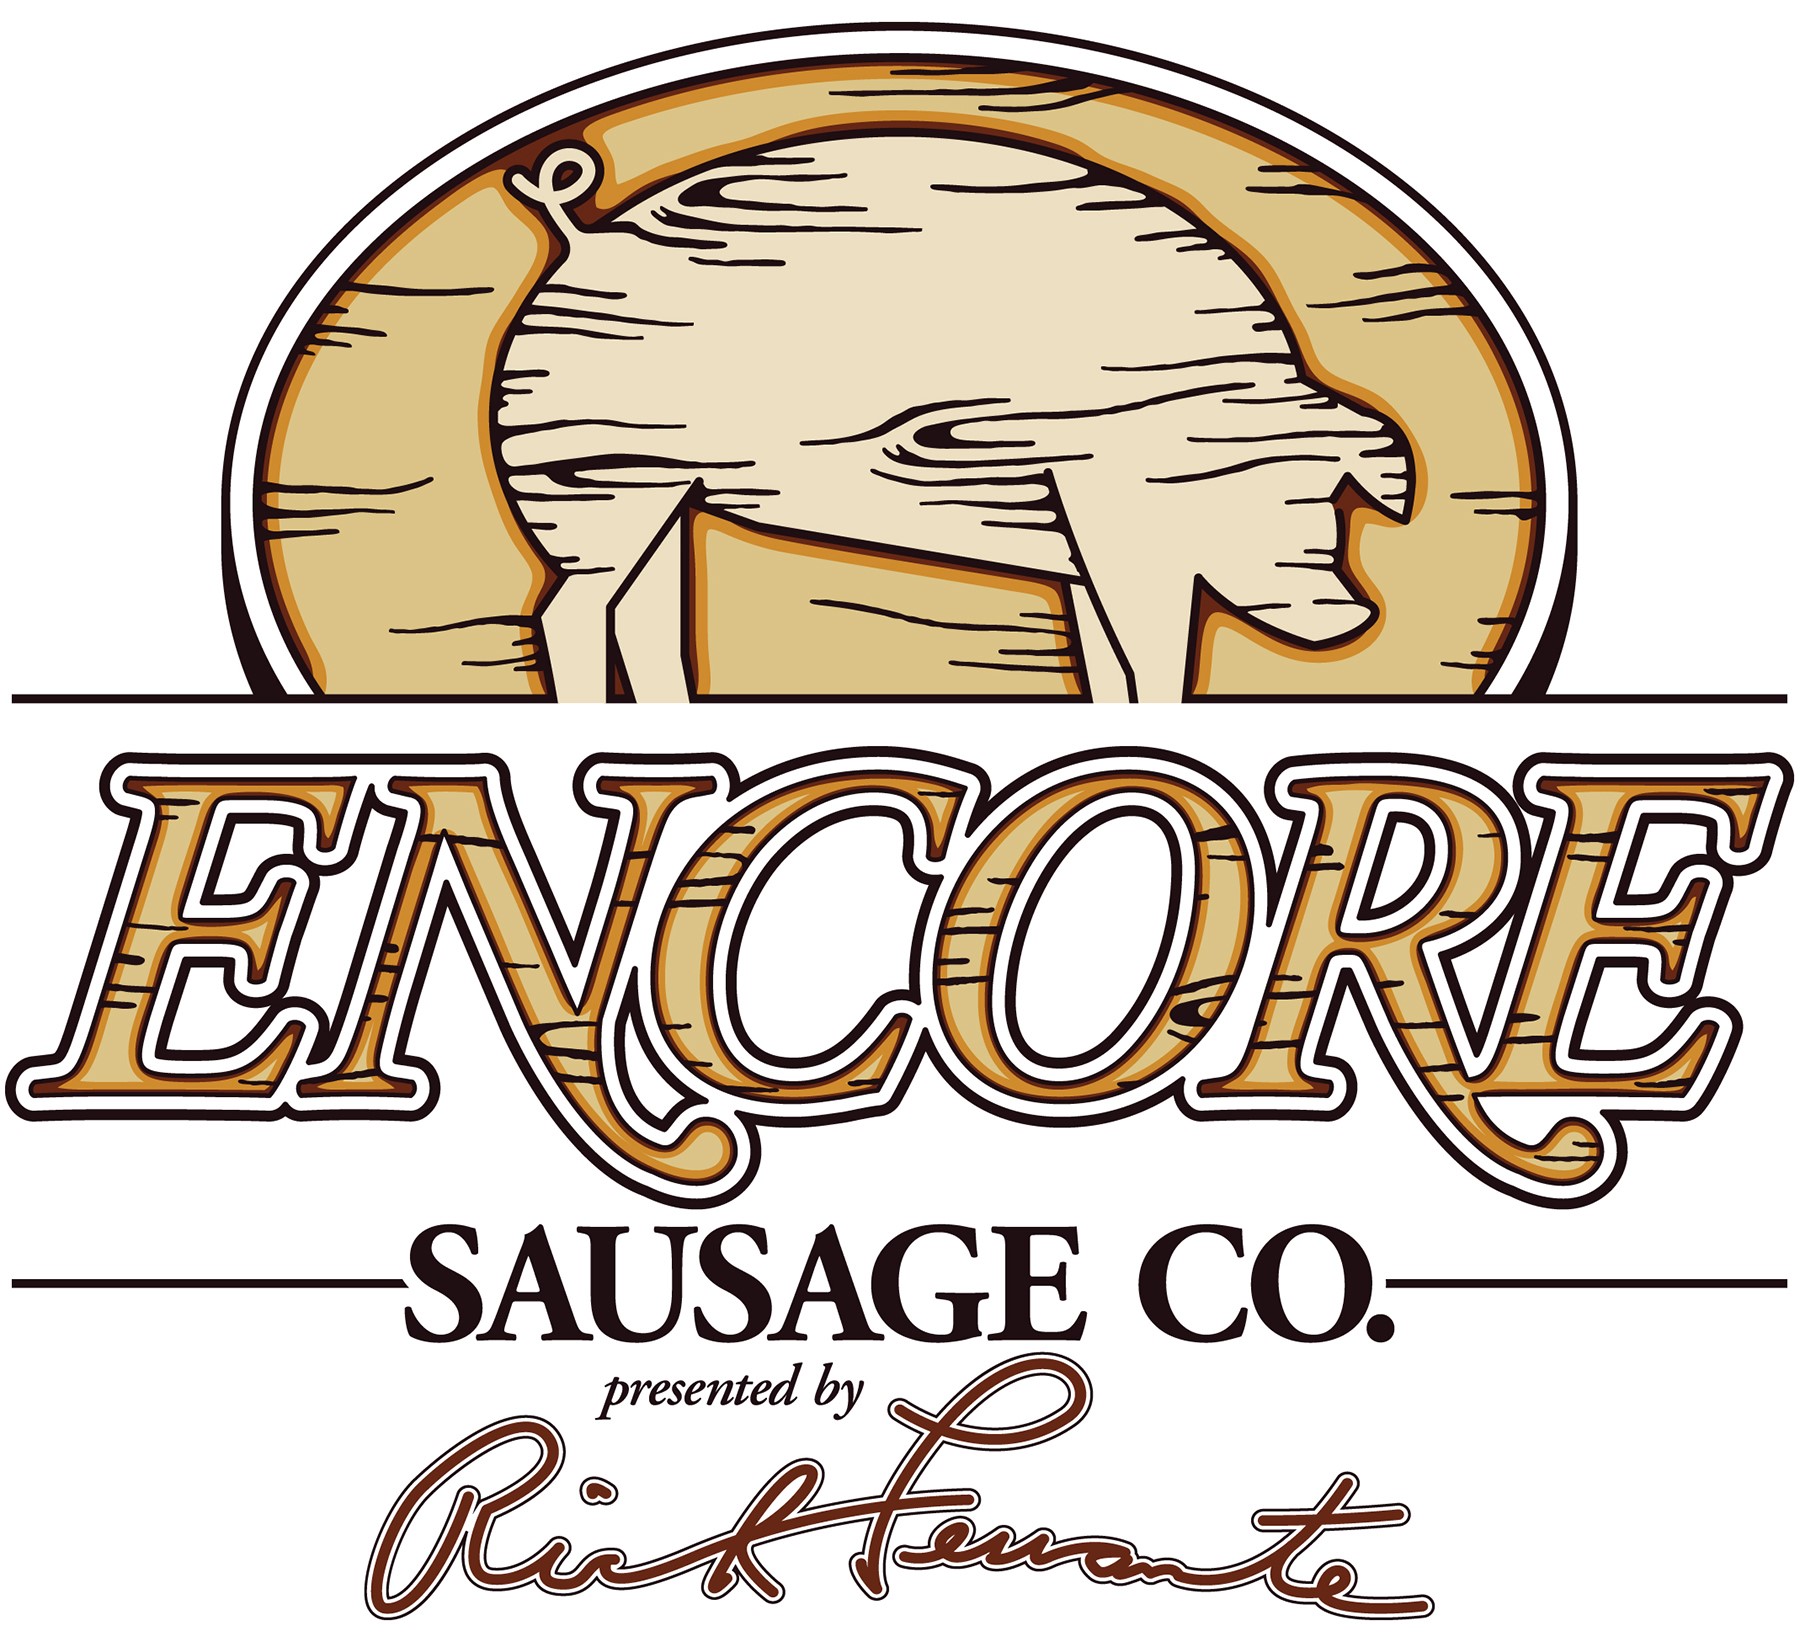 Encore Sausage Co.